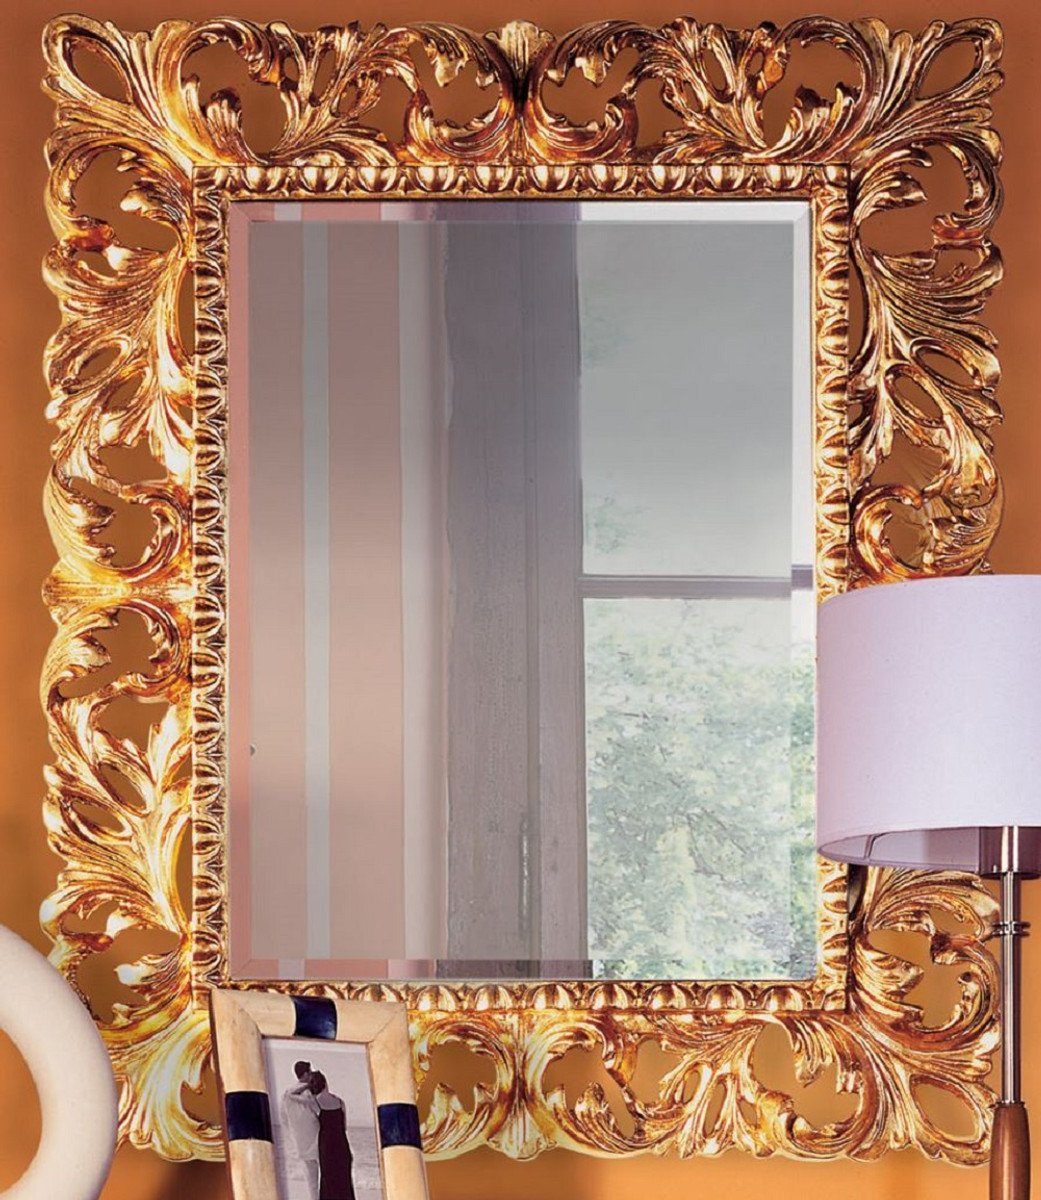 107 Spiegel Barockstil Massivholz Wandspiegel Garderoben Spiegel Spiegel Stil - Barockspiegel Wohnzimmer 6 Padrino - x - Casa im Edler Barock - x H. Barock Luxus Gold 87 Antik cm Möbel